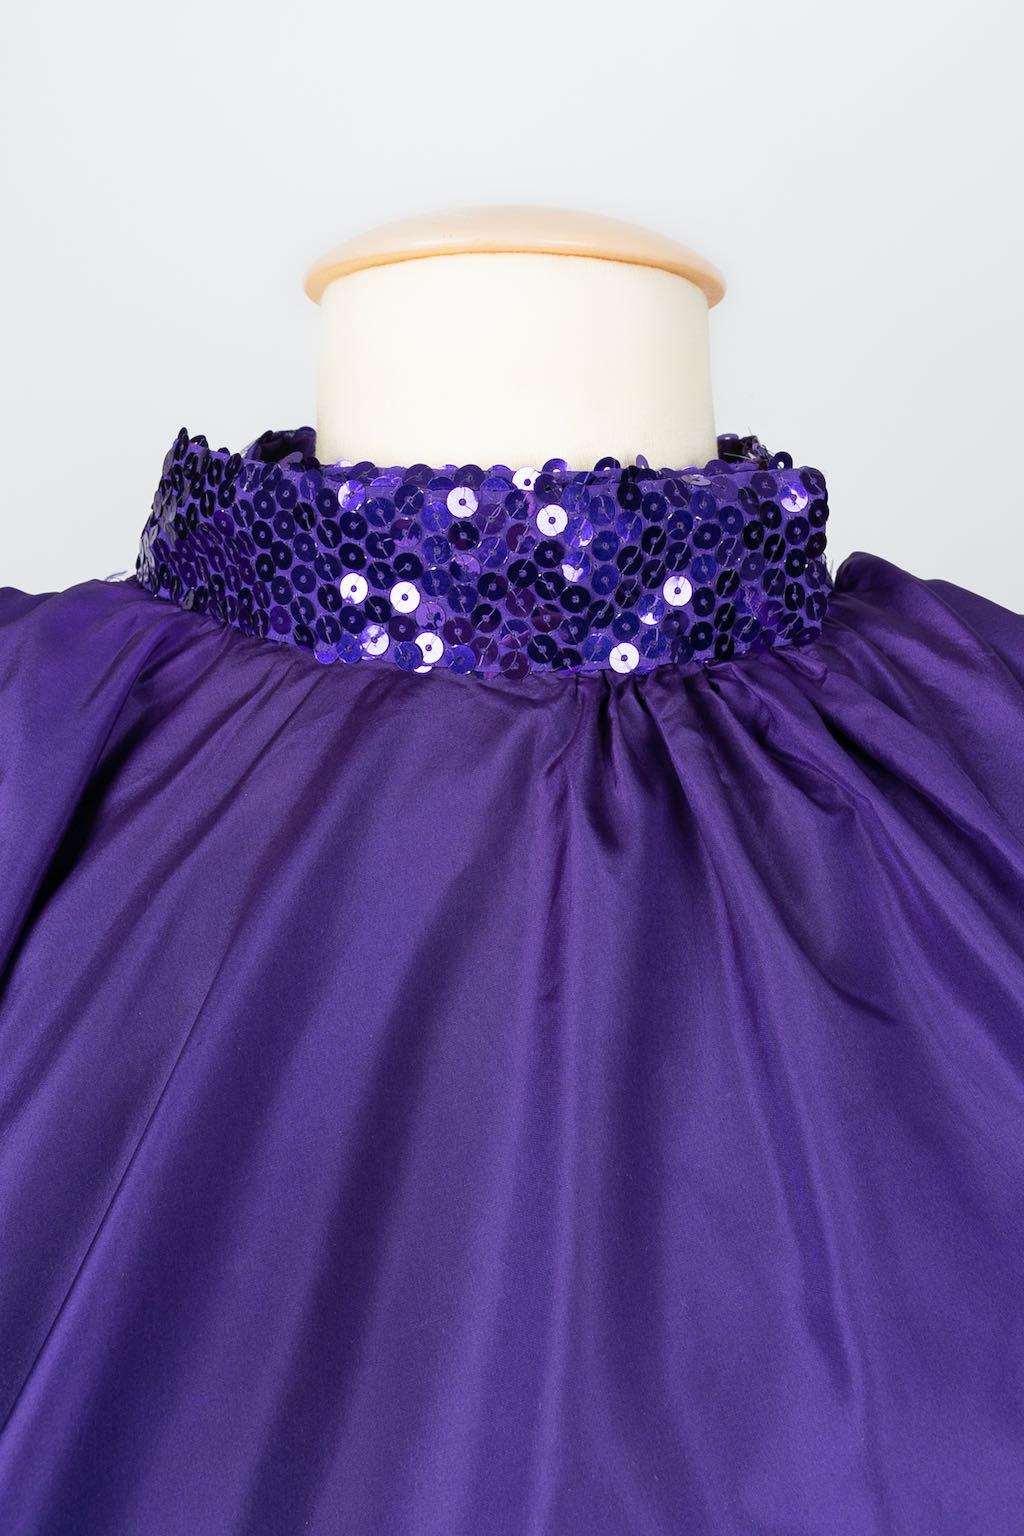 Azzaro Evening Taffeta Cape Embroidered Dress, Size 40FR 9